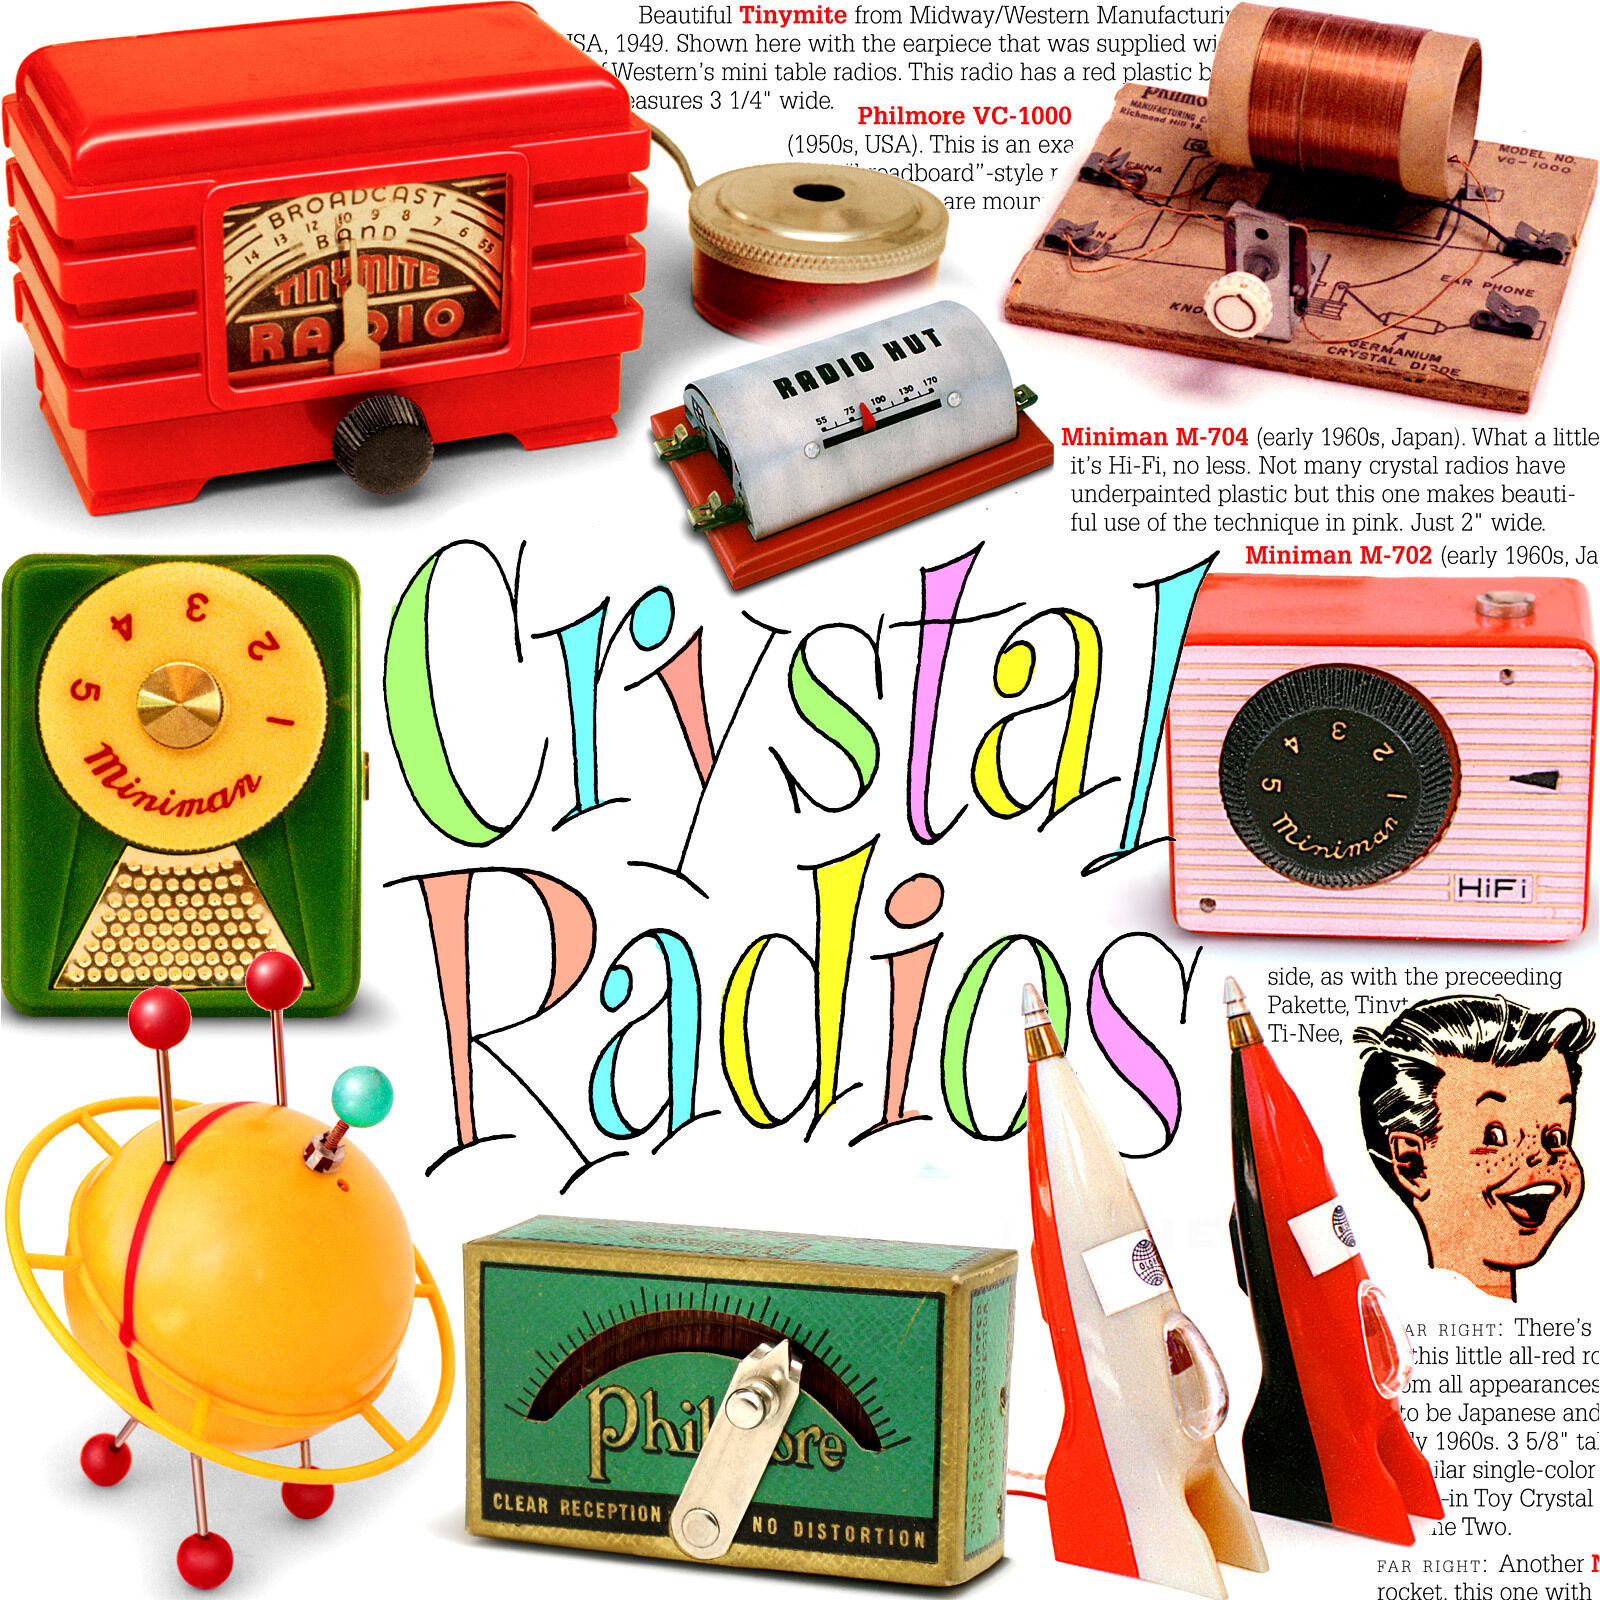 Toy Crystal Radios Volume One - 70 Amazing Vintage Radios In Fun Full-color Book